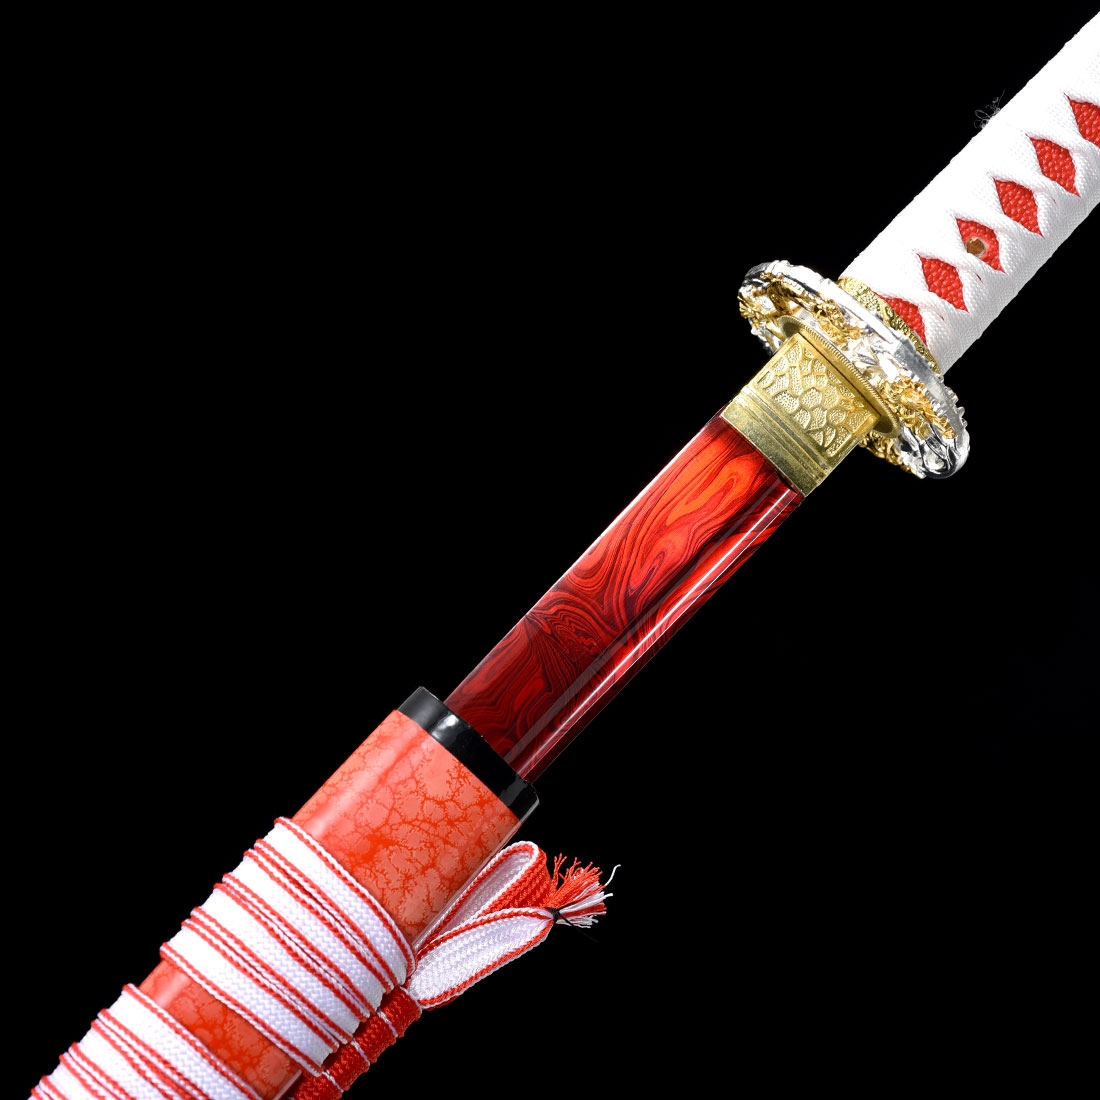 Red Katana | Handmade Japanese Katana Sword With Blood Red Blade And ...